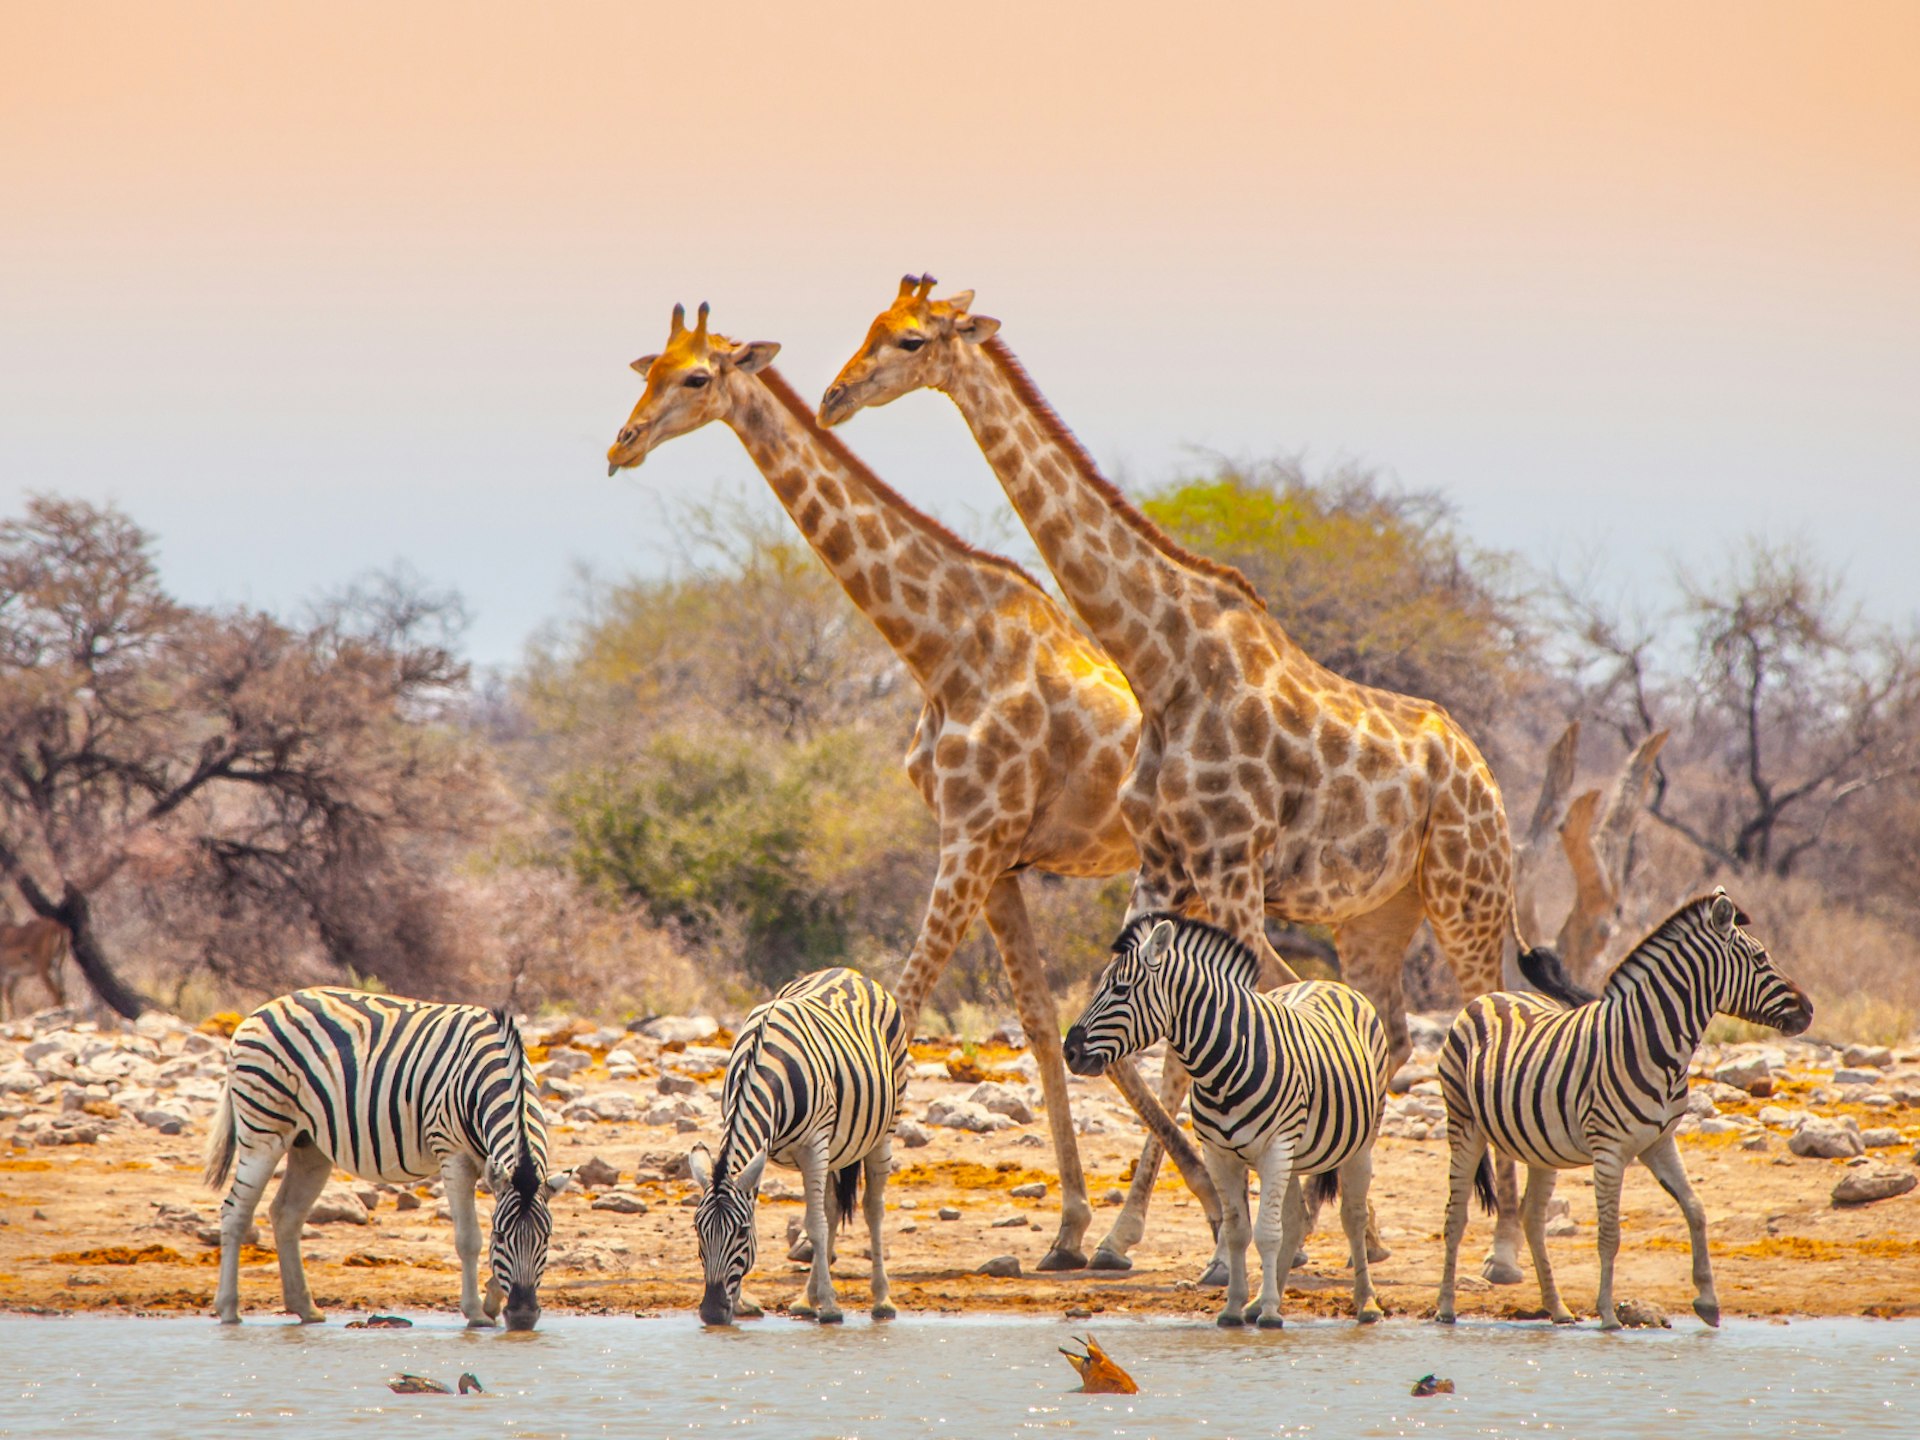 Two giraffes and four zebras as a waterhole in Etosha National Park, Namibia